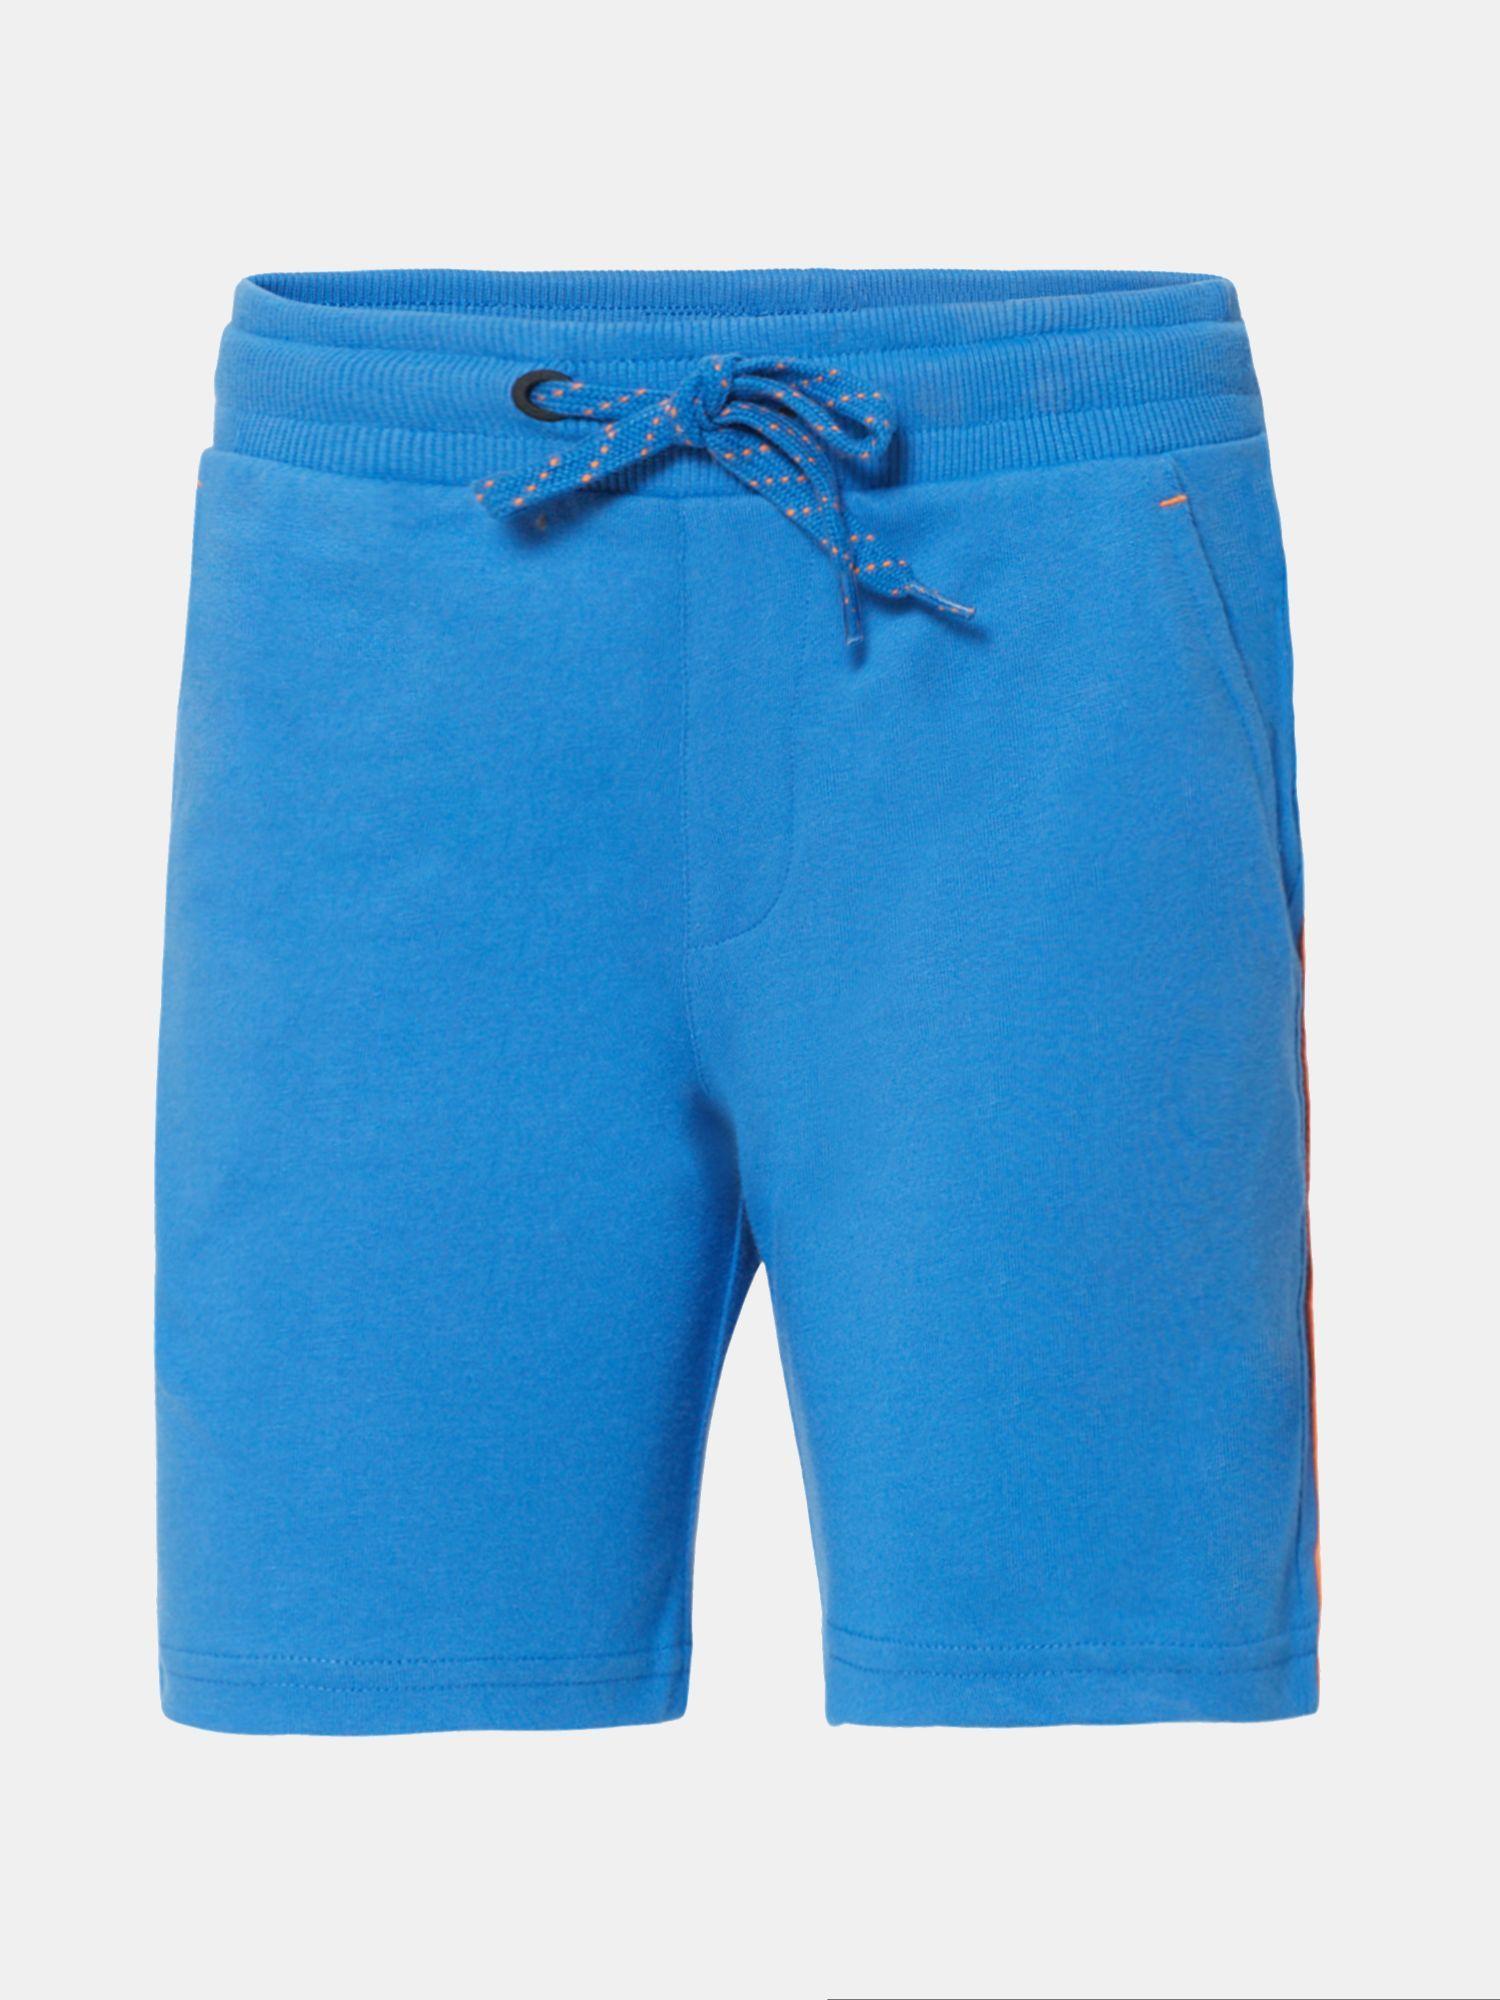 jockey ab30 cotton rich shorts for boys with side pocket & drawstring closure-blue